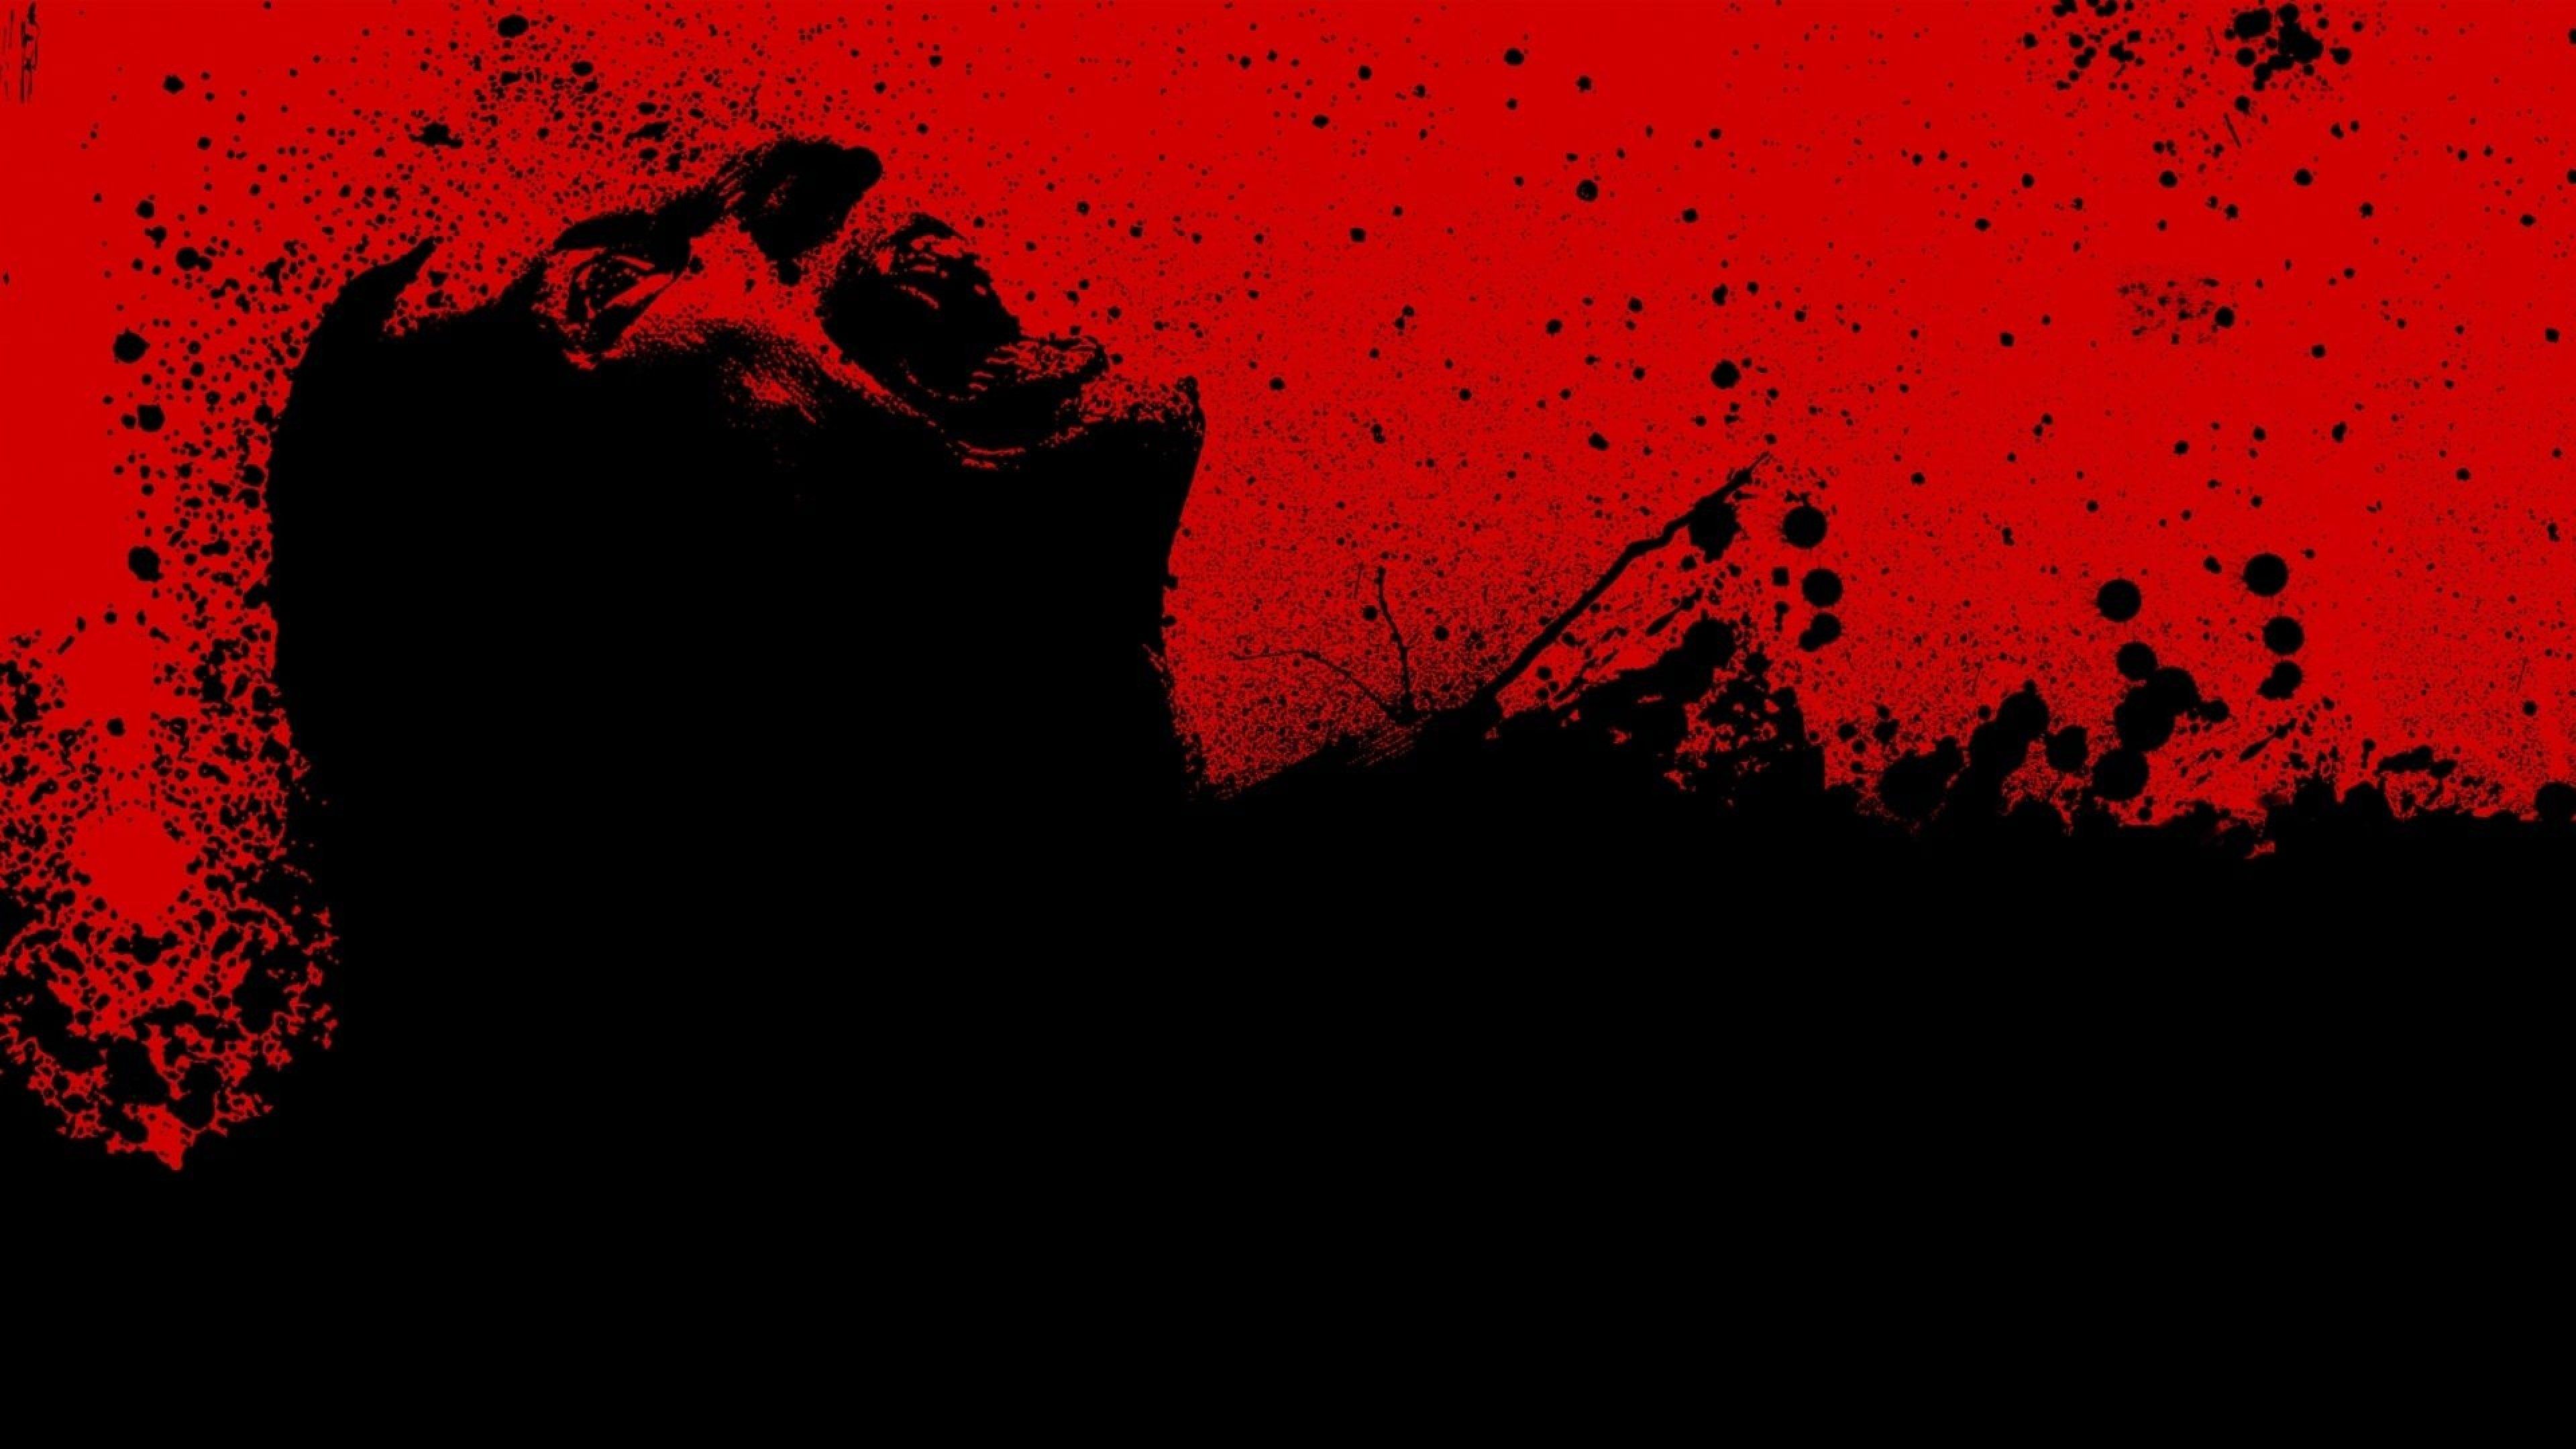 Free download 30 days of night Red Black Blood Wallpaper Backgrounds 4K Ultra HD [3840x2160] for your Desktop, Mobile & Tablet